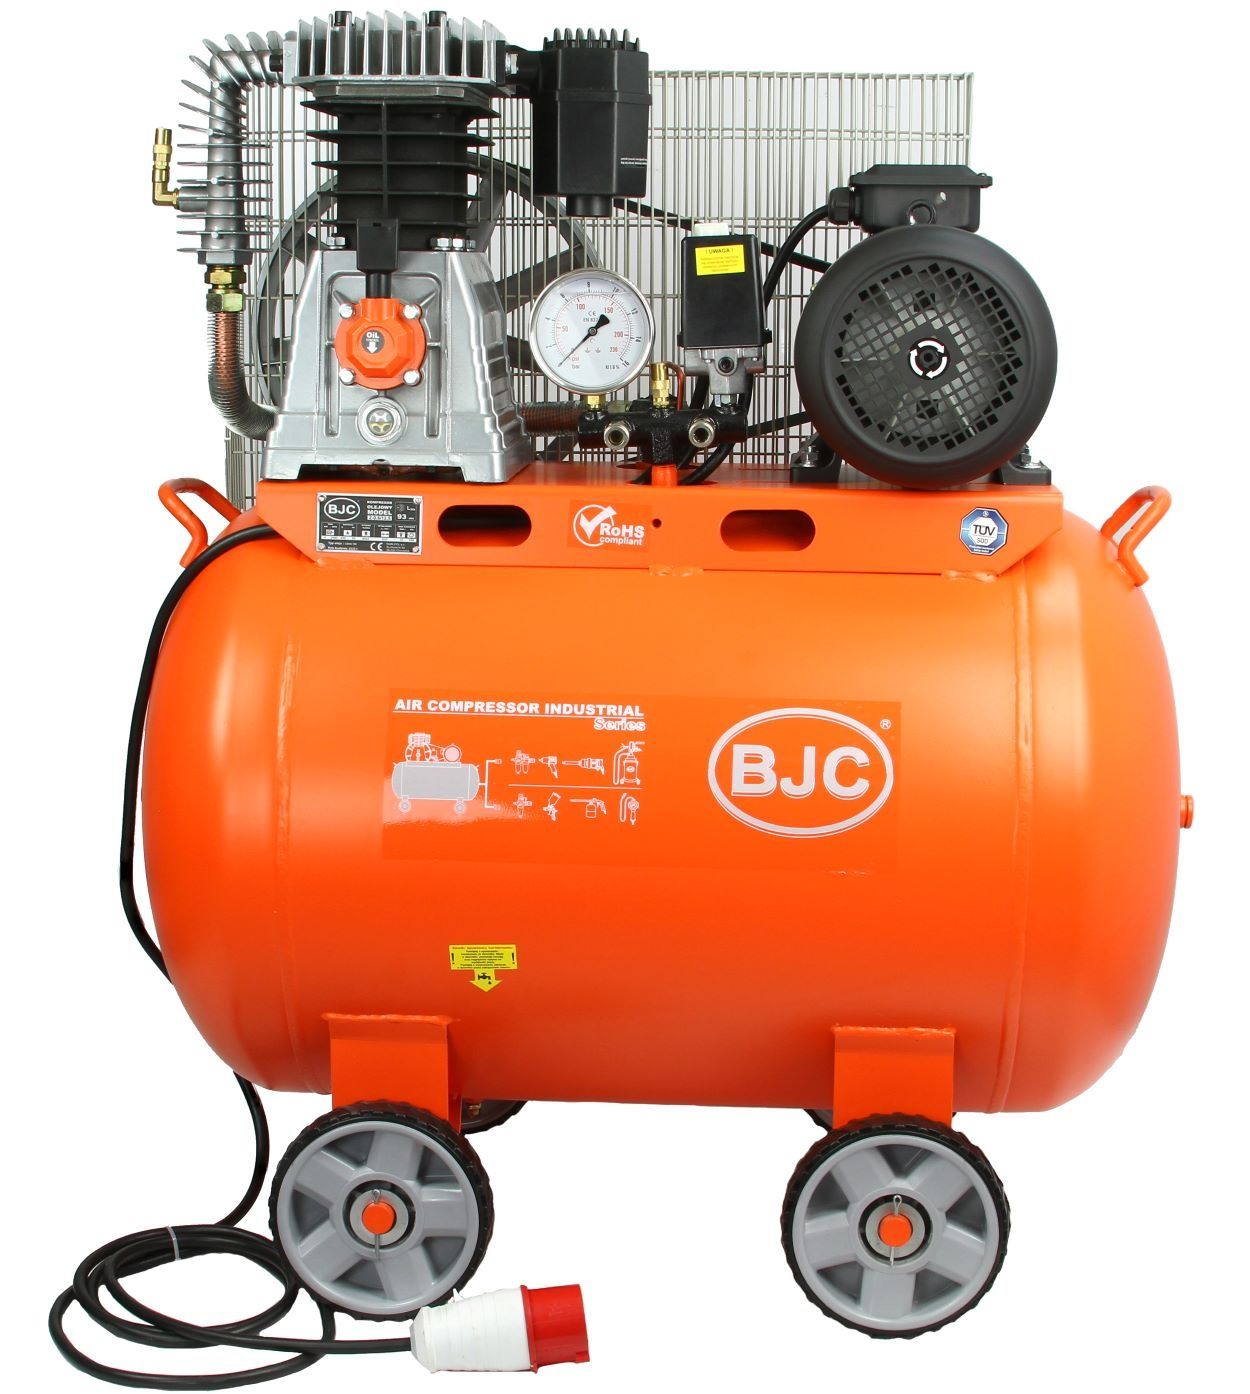 Kompresor olejowy sprężarka 200l BJC 10 bar  820l/min